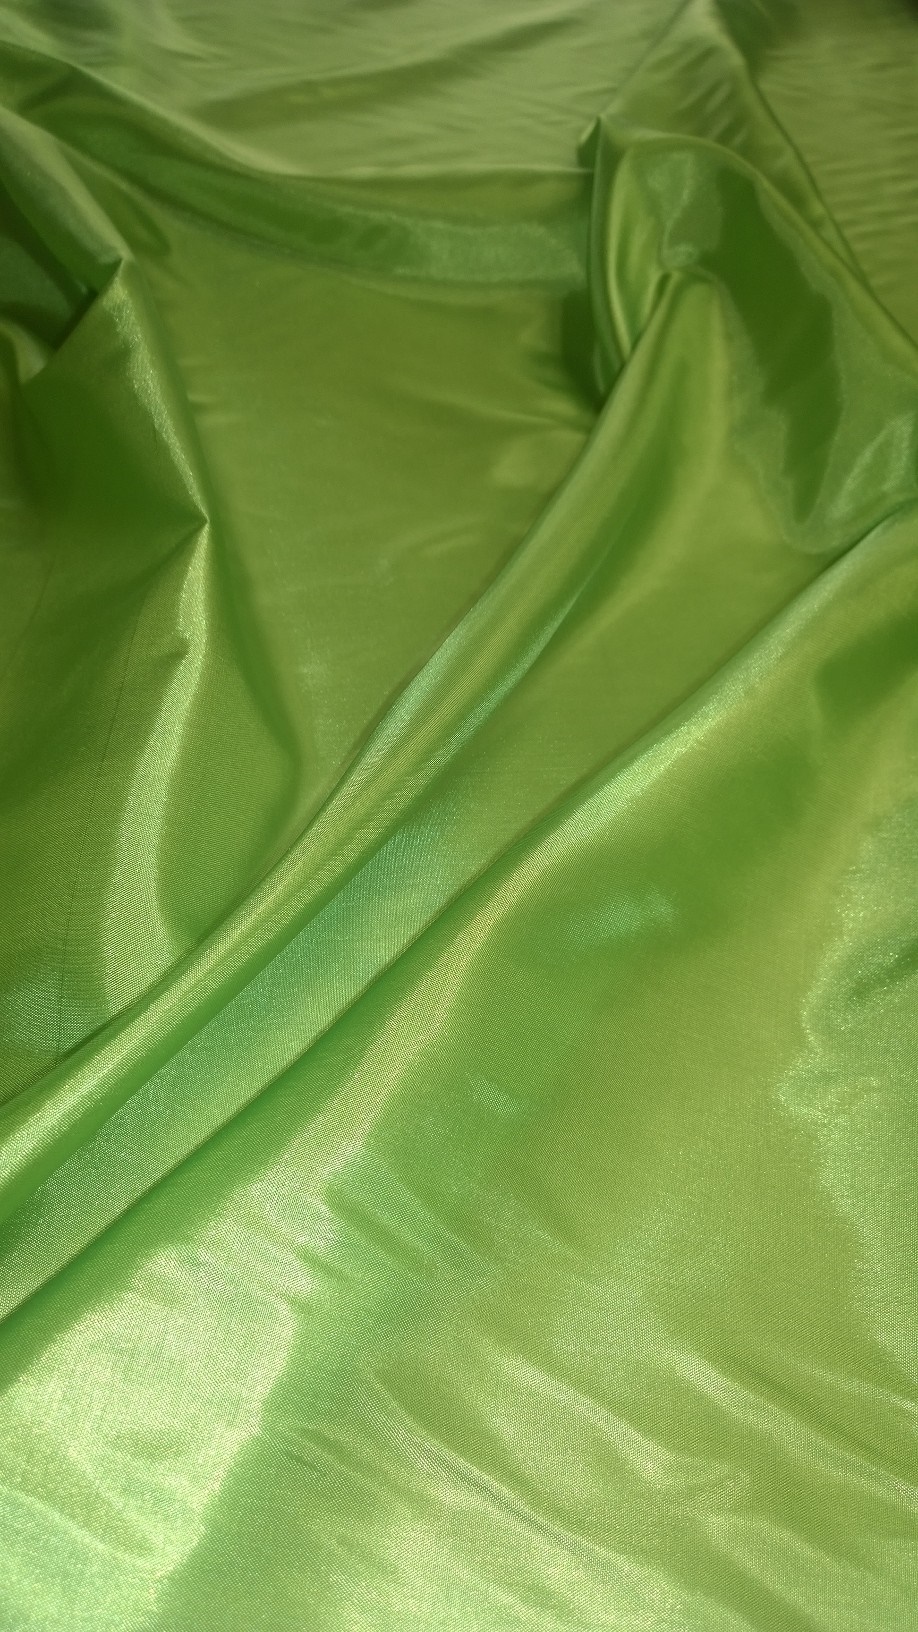 By The Yard -60" Leaf Green Habotai Fabric -100% Polyester